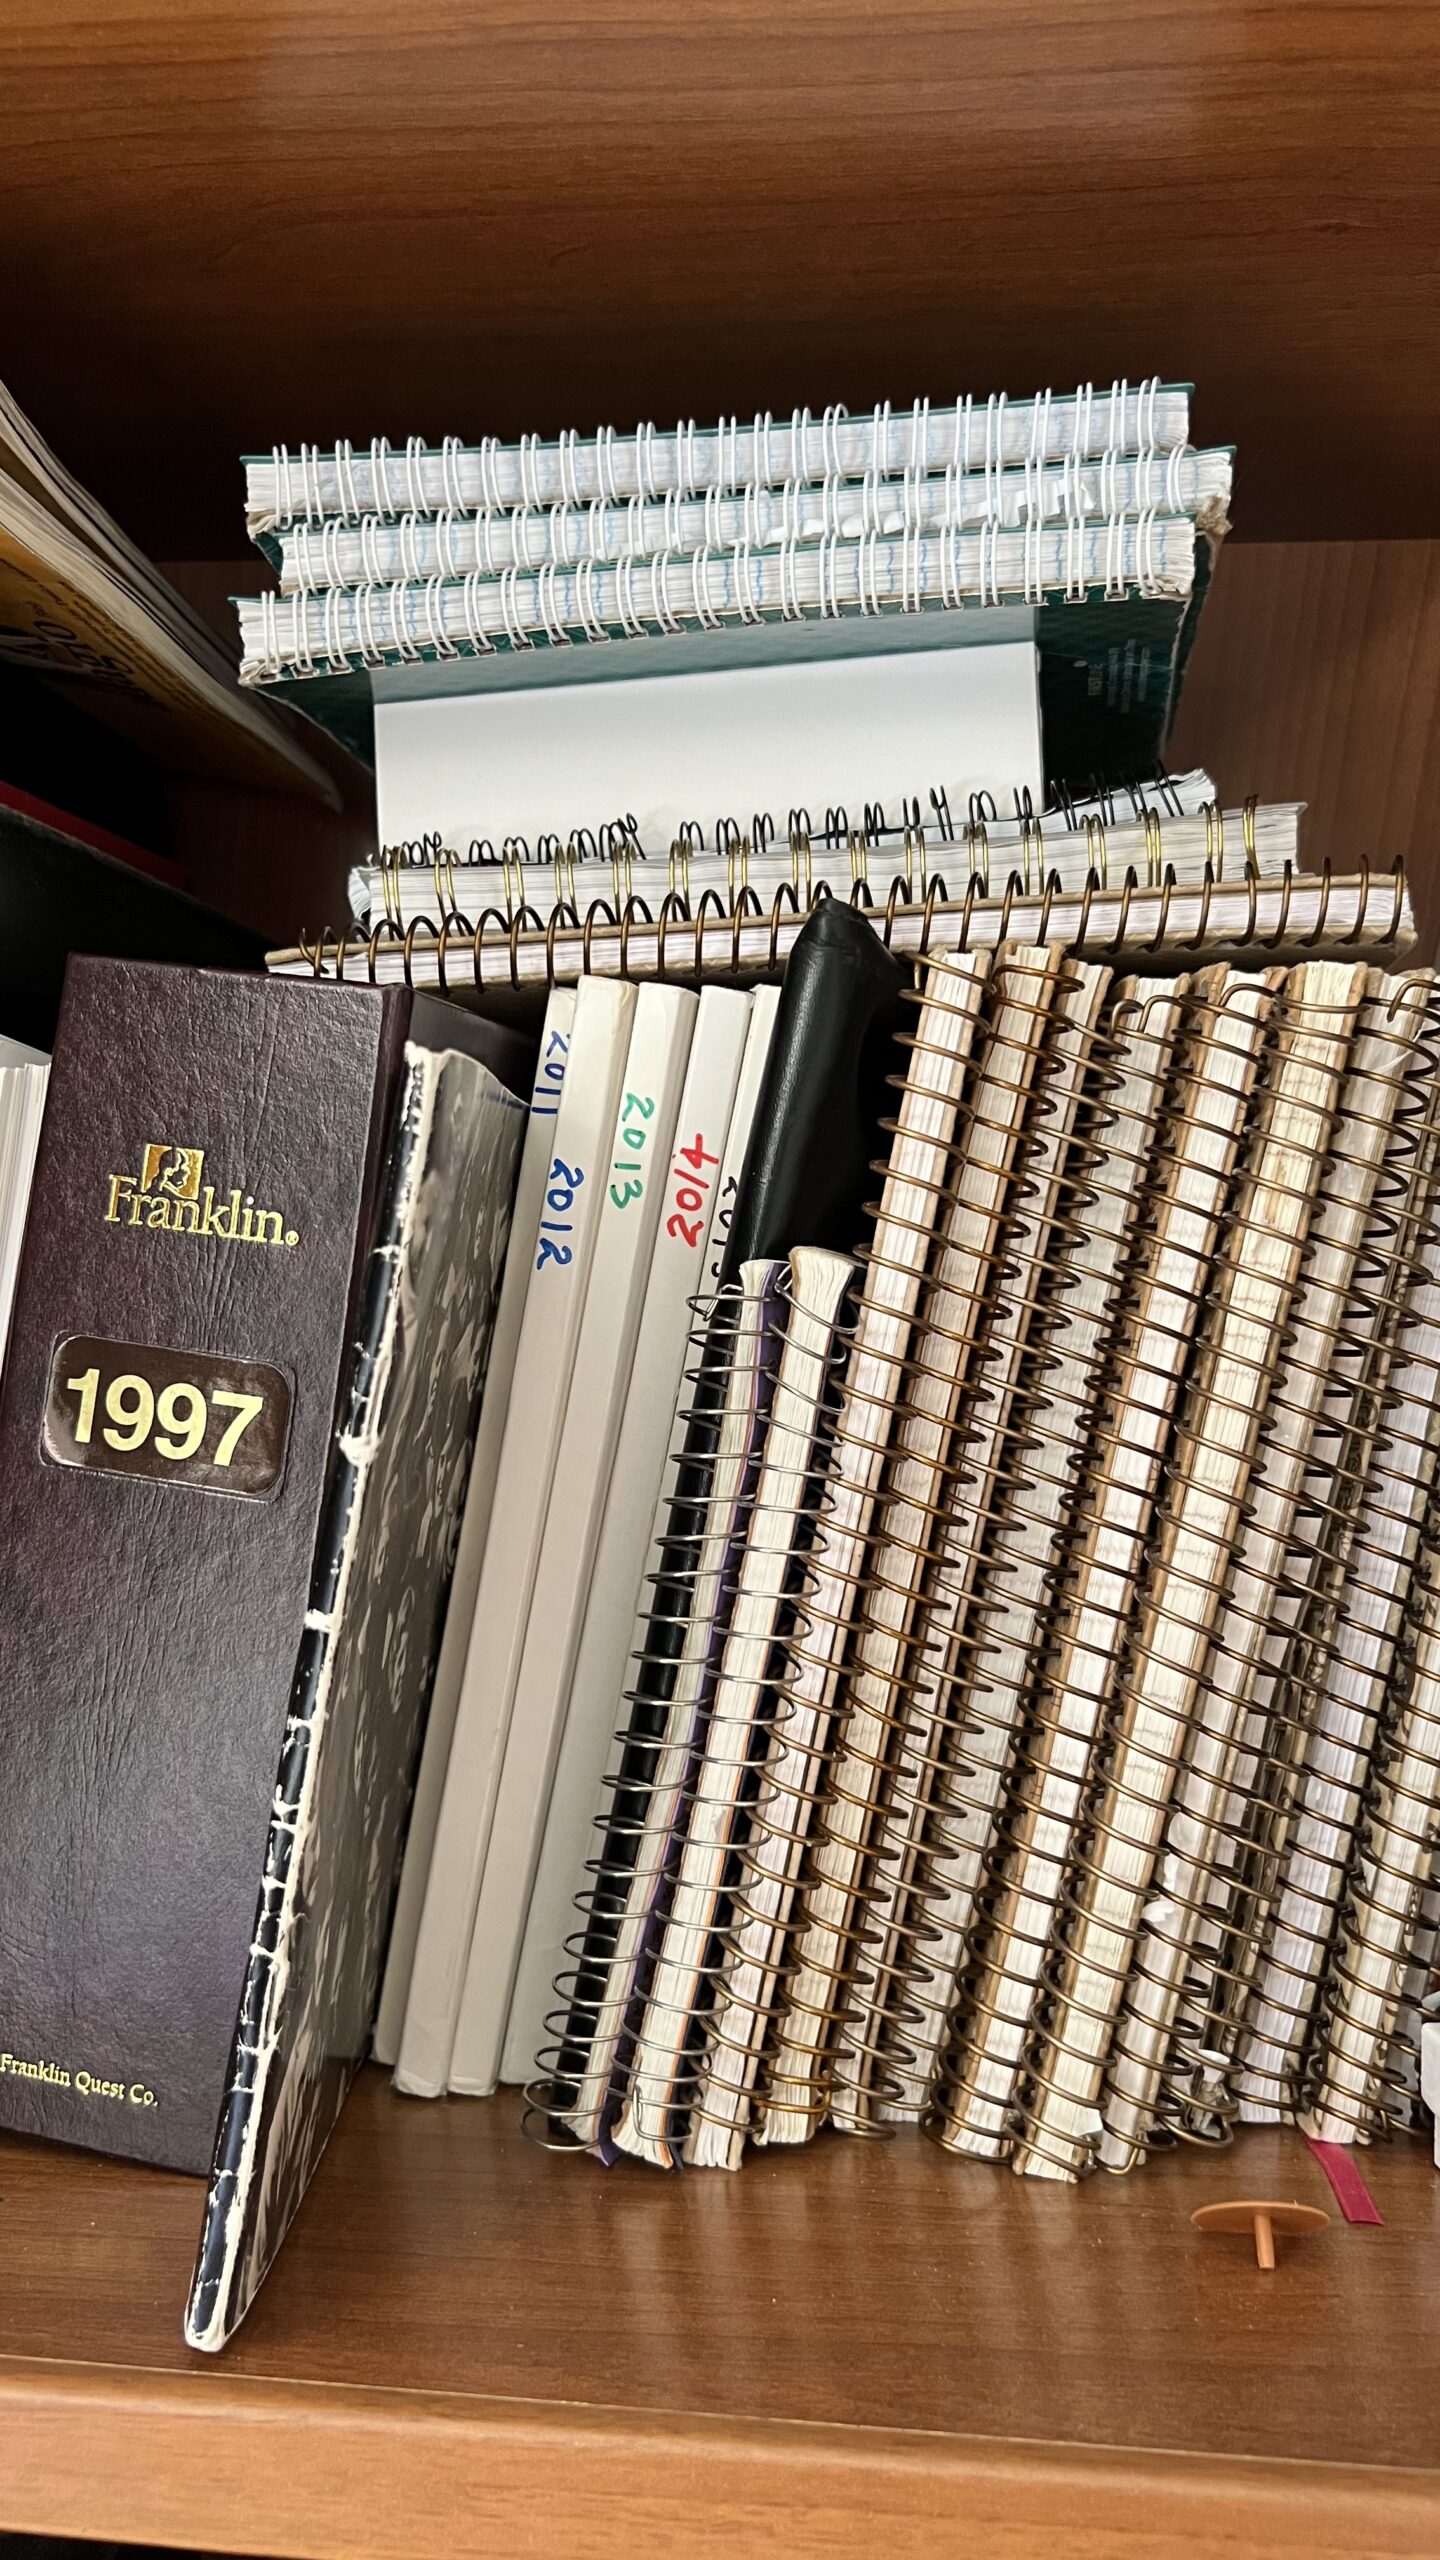 brown daytimer binder with 1997 on spine beside several spiral notebooks on shelf